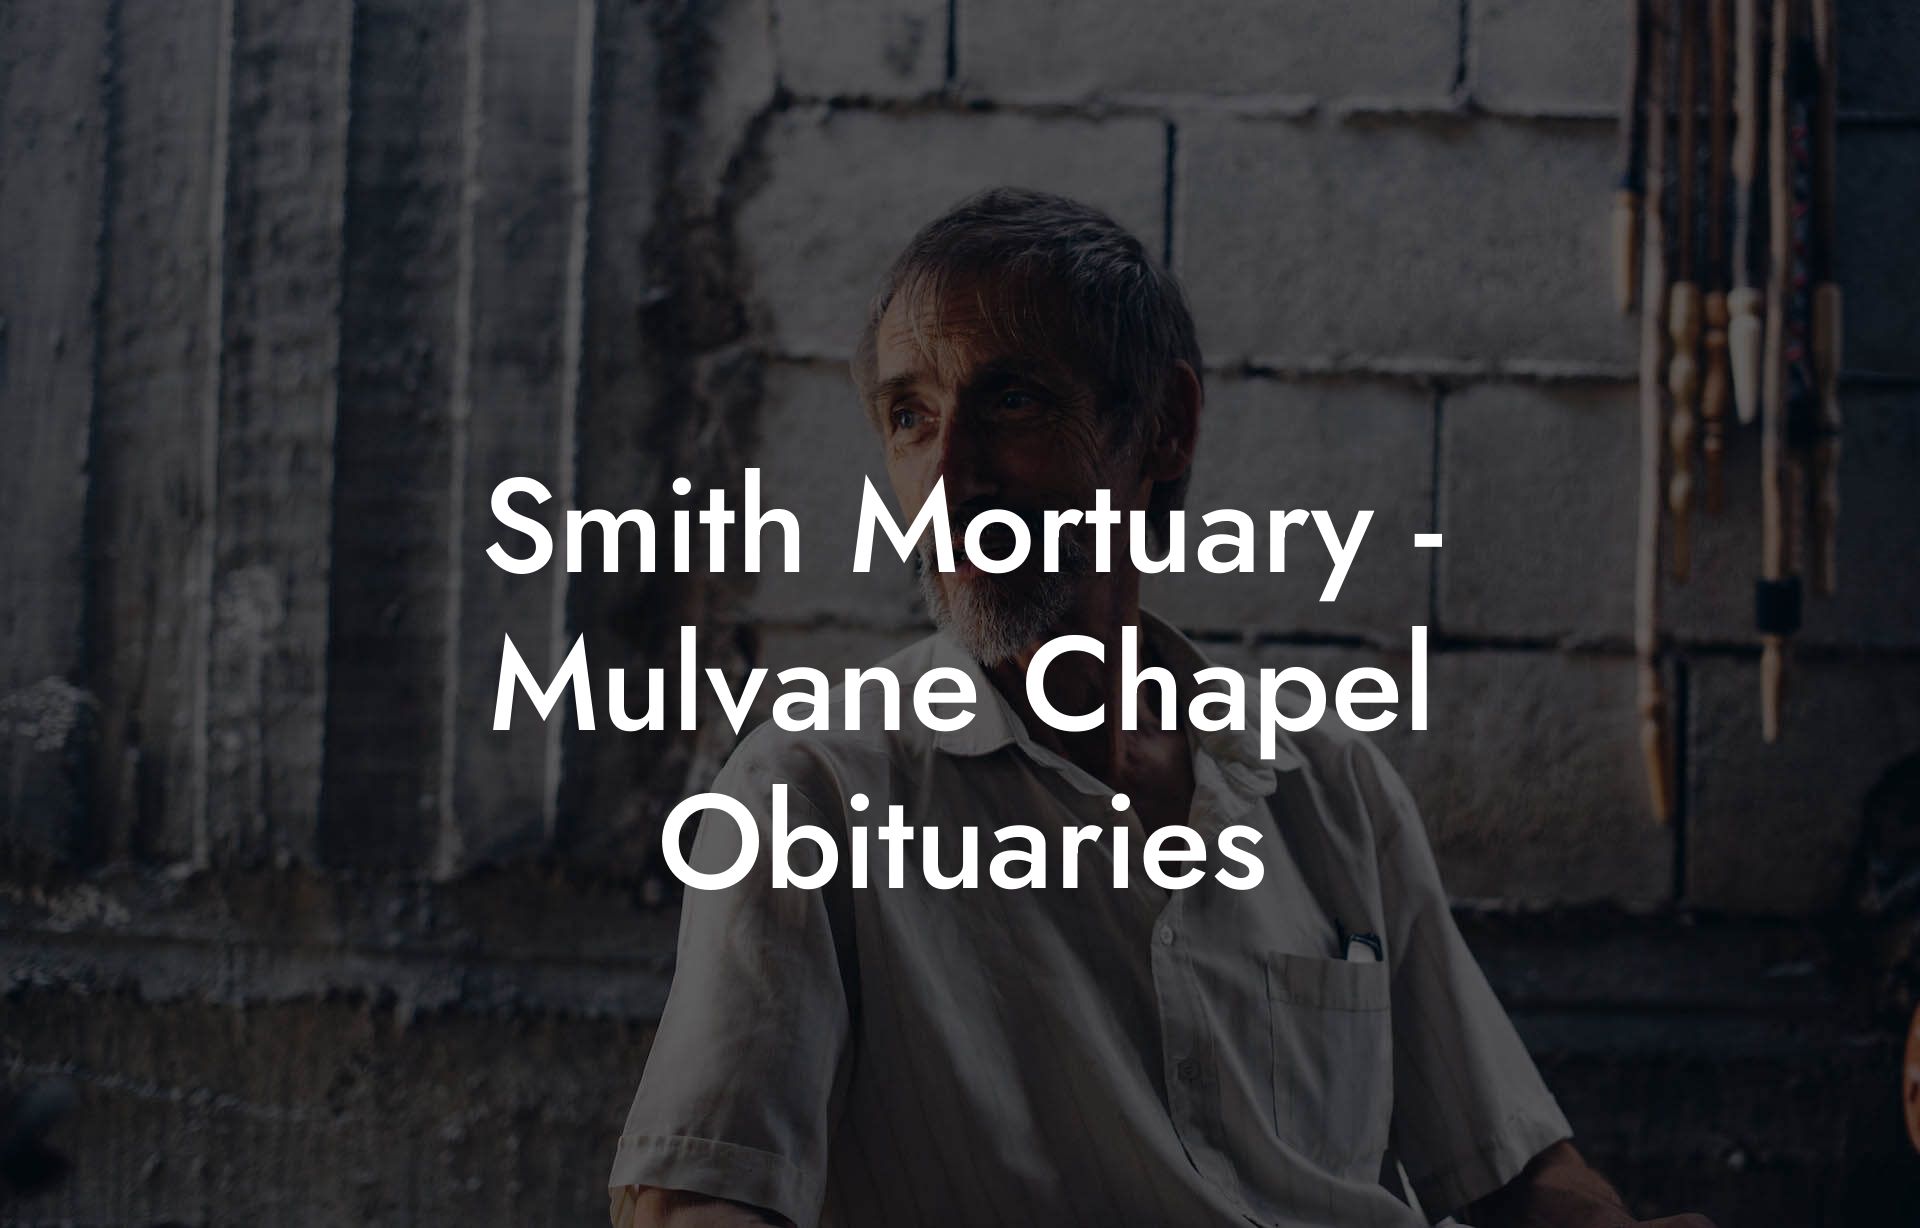 Smith Mortuary - Mulvane Chapel Obituaries